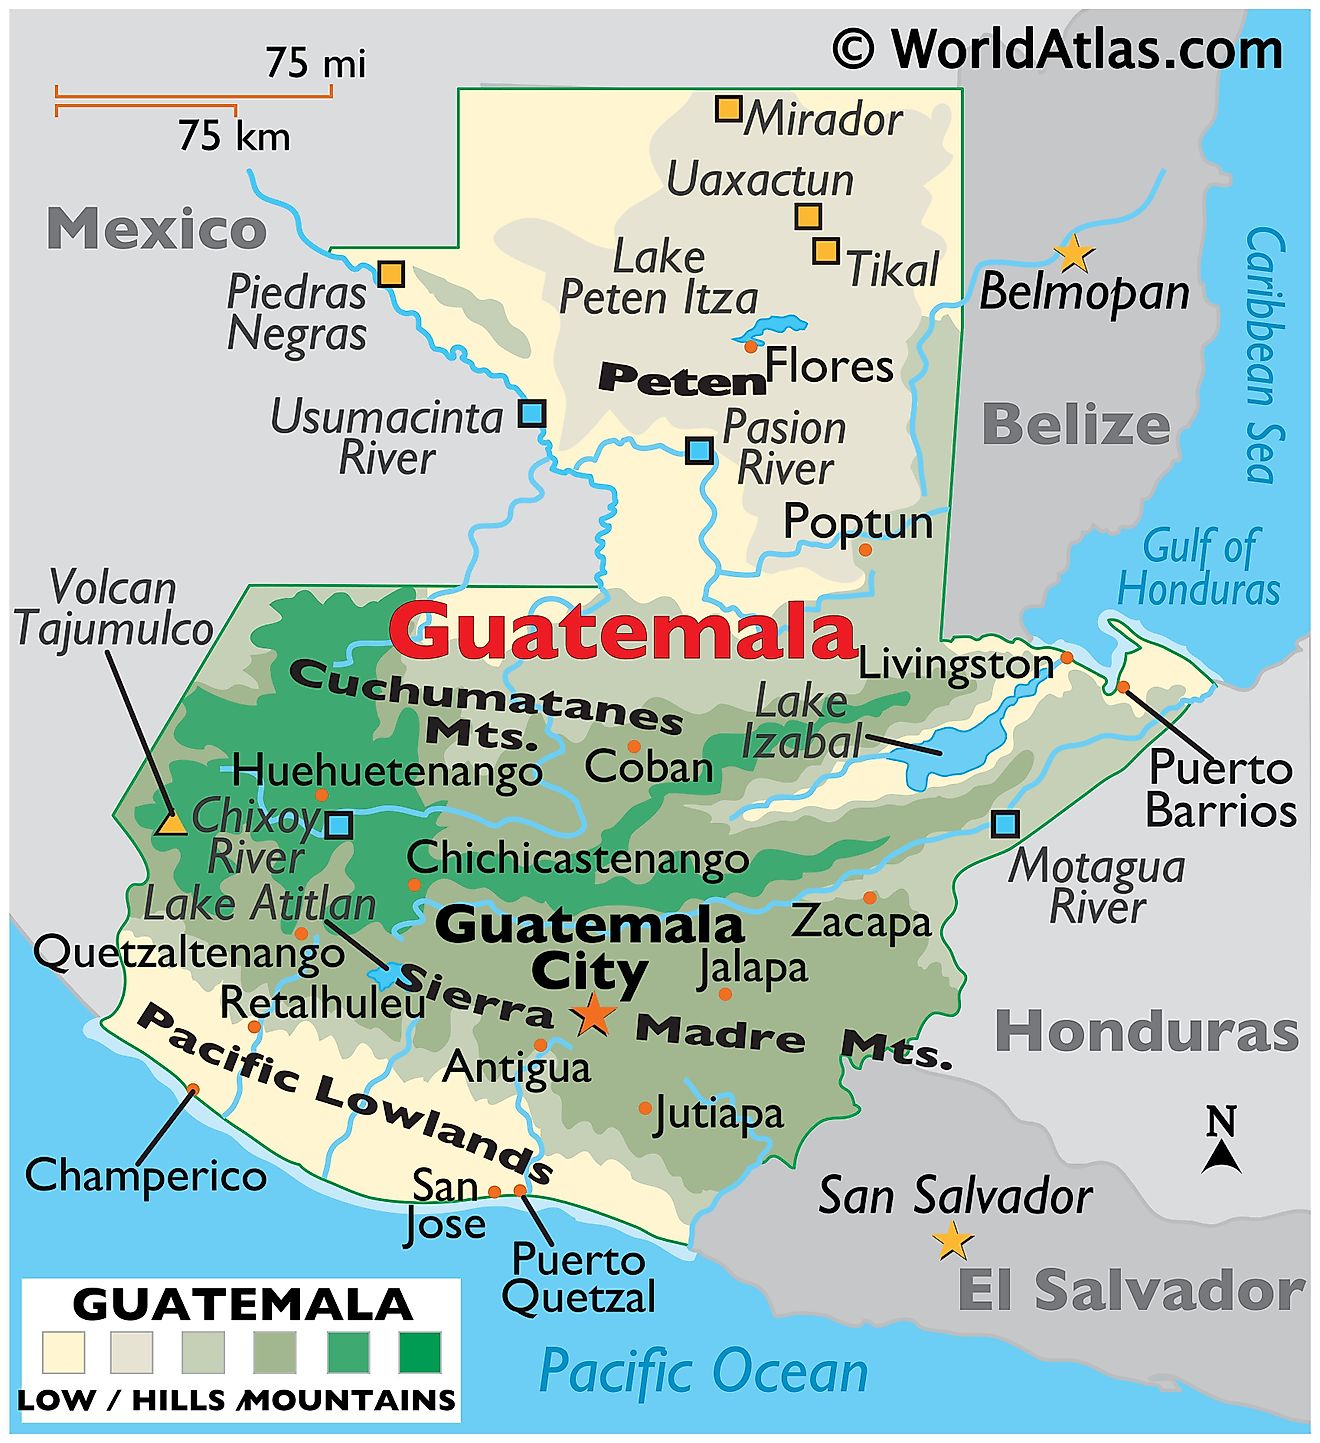 Physical Map of Guatemala showing terrain, major mountain ranges, highest point, rivers, Lake Izabal, the Peten region, important cities, international borders, etc.